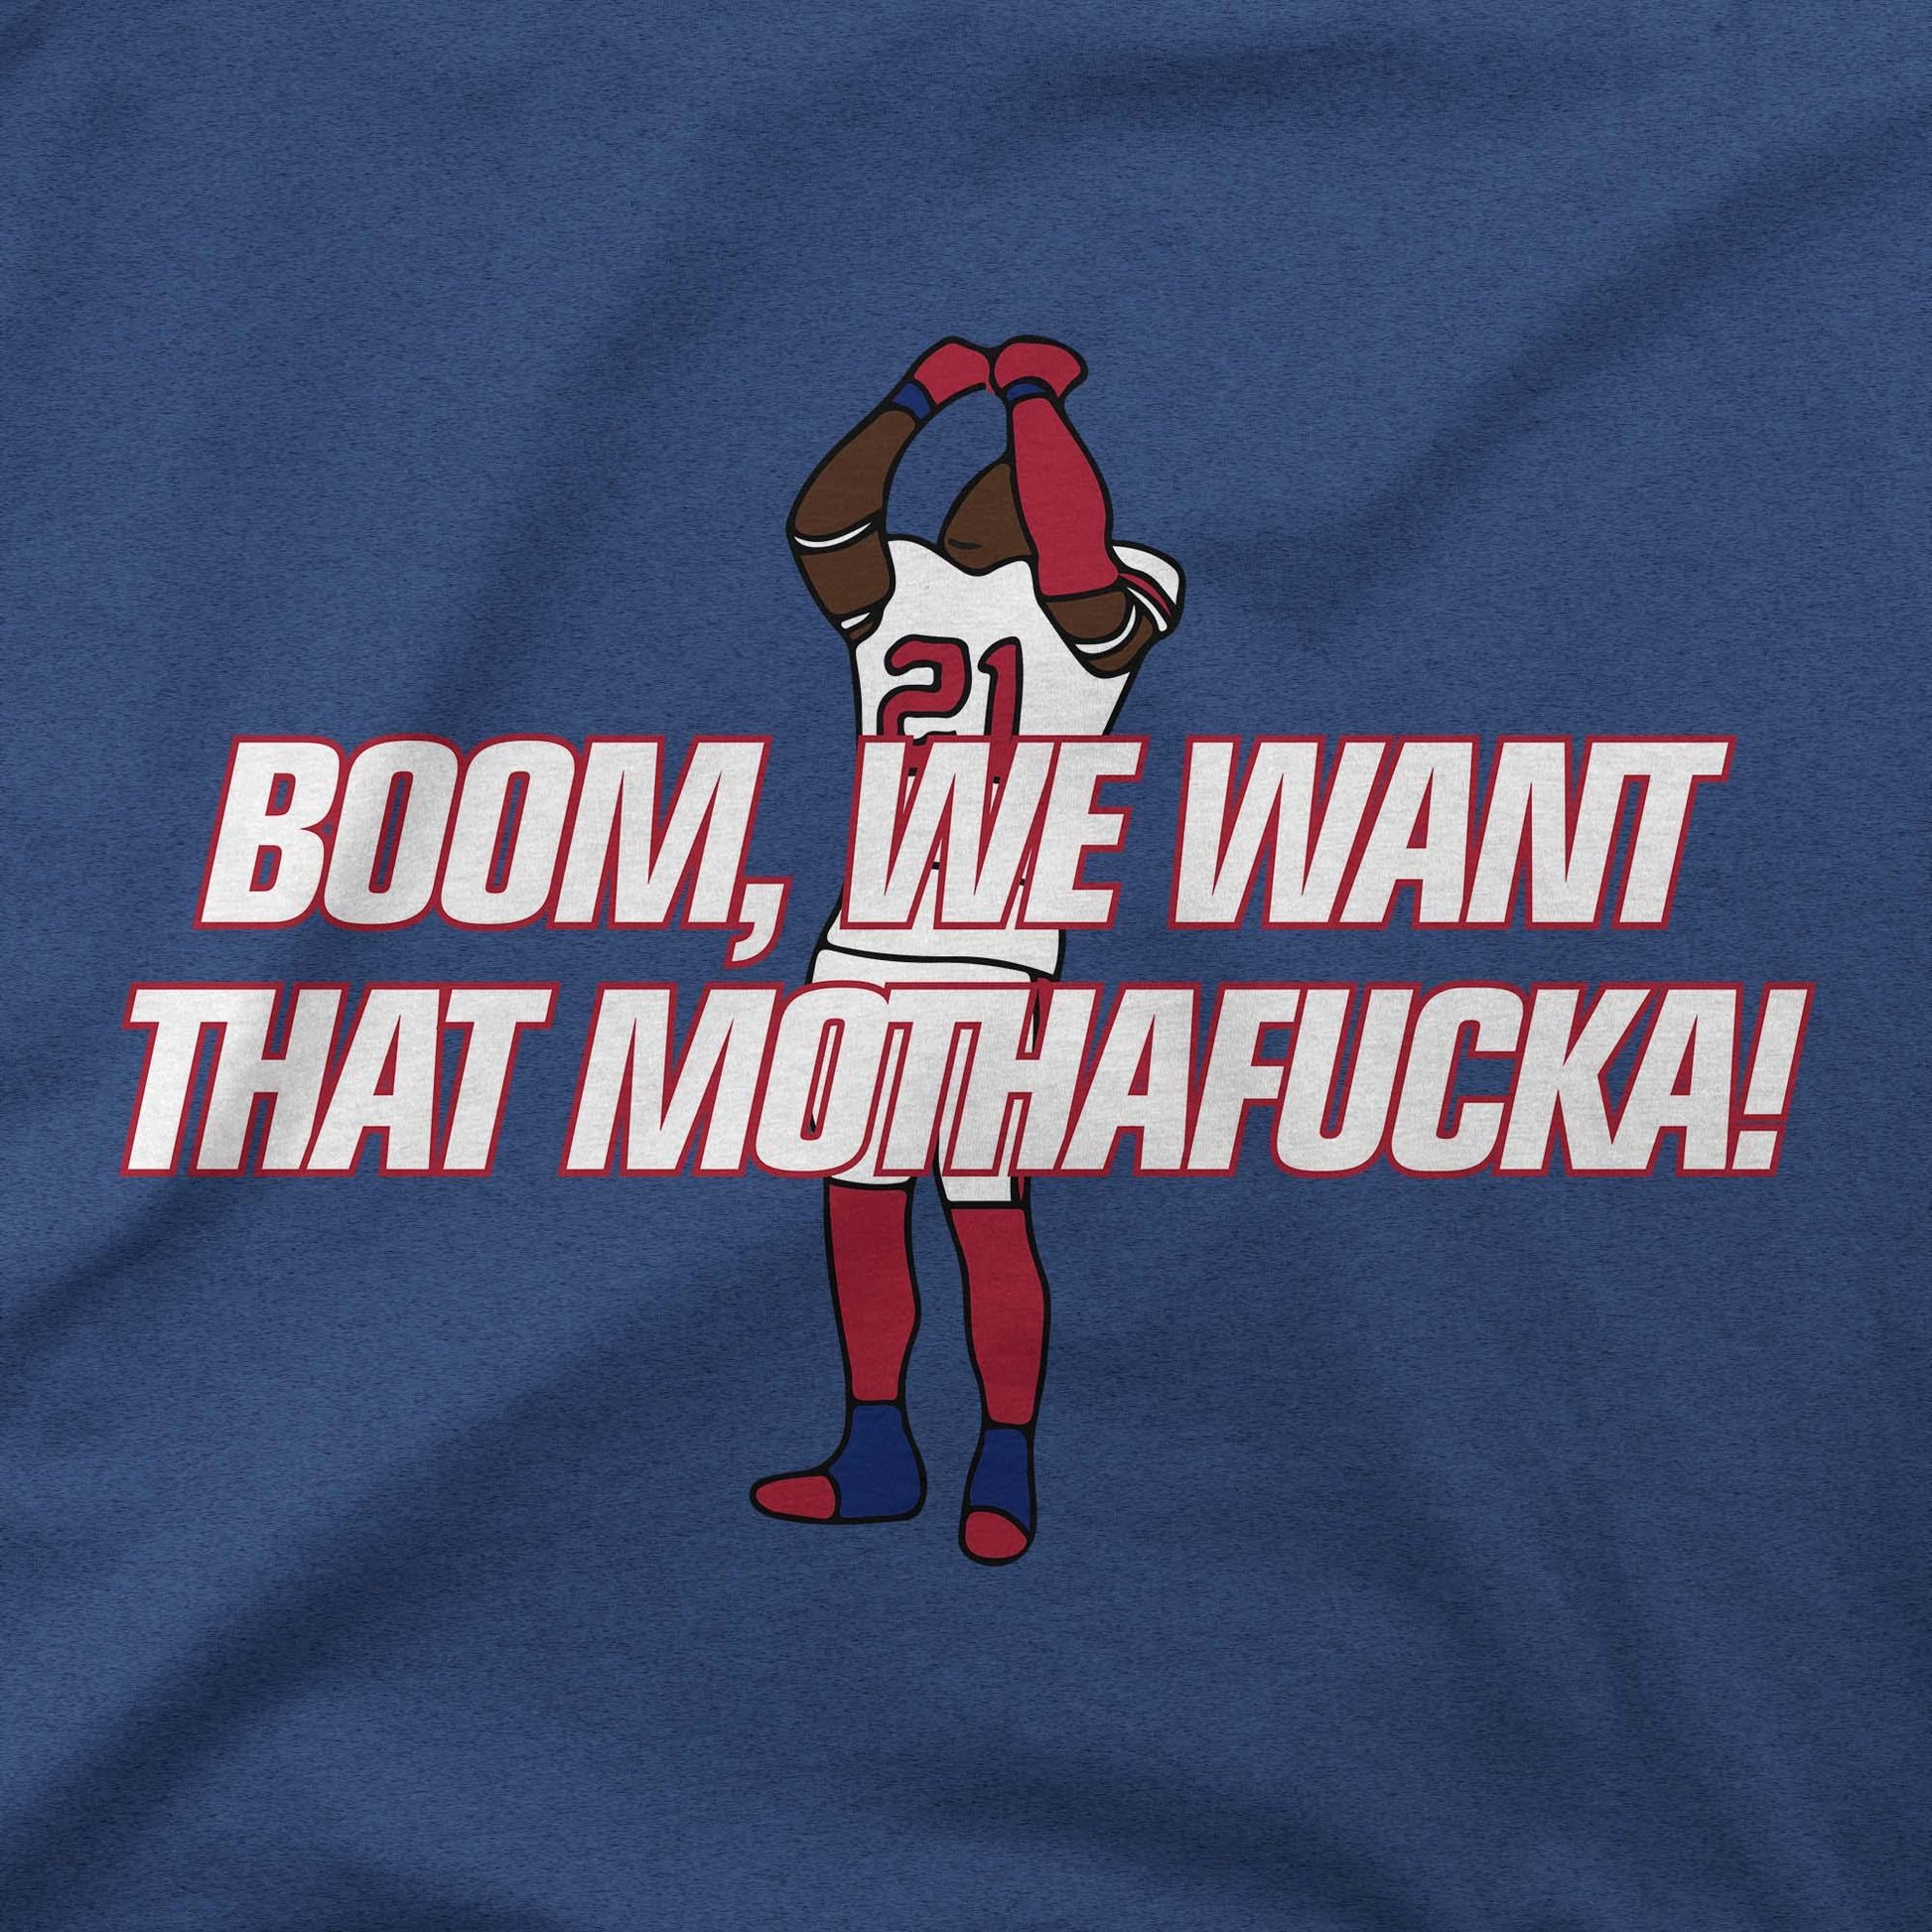 Boom, We Want That Mothafucka! | T-Shirt - Jomboy Media